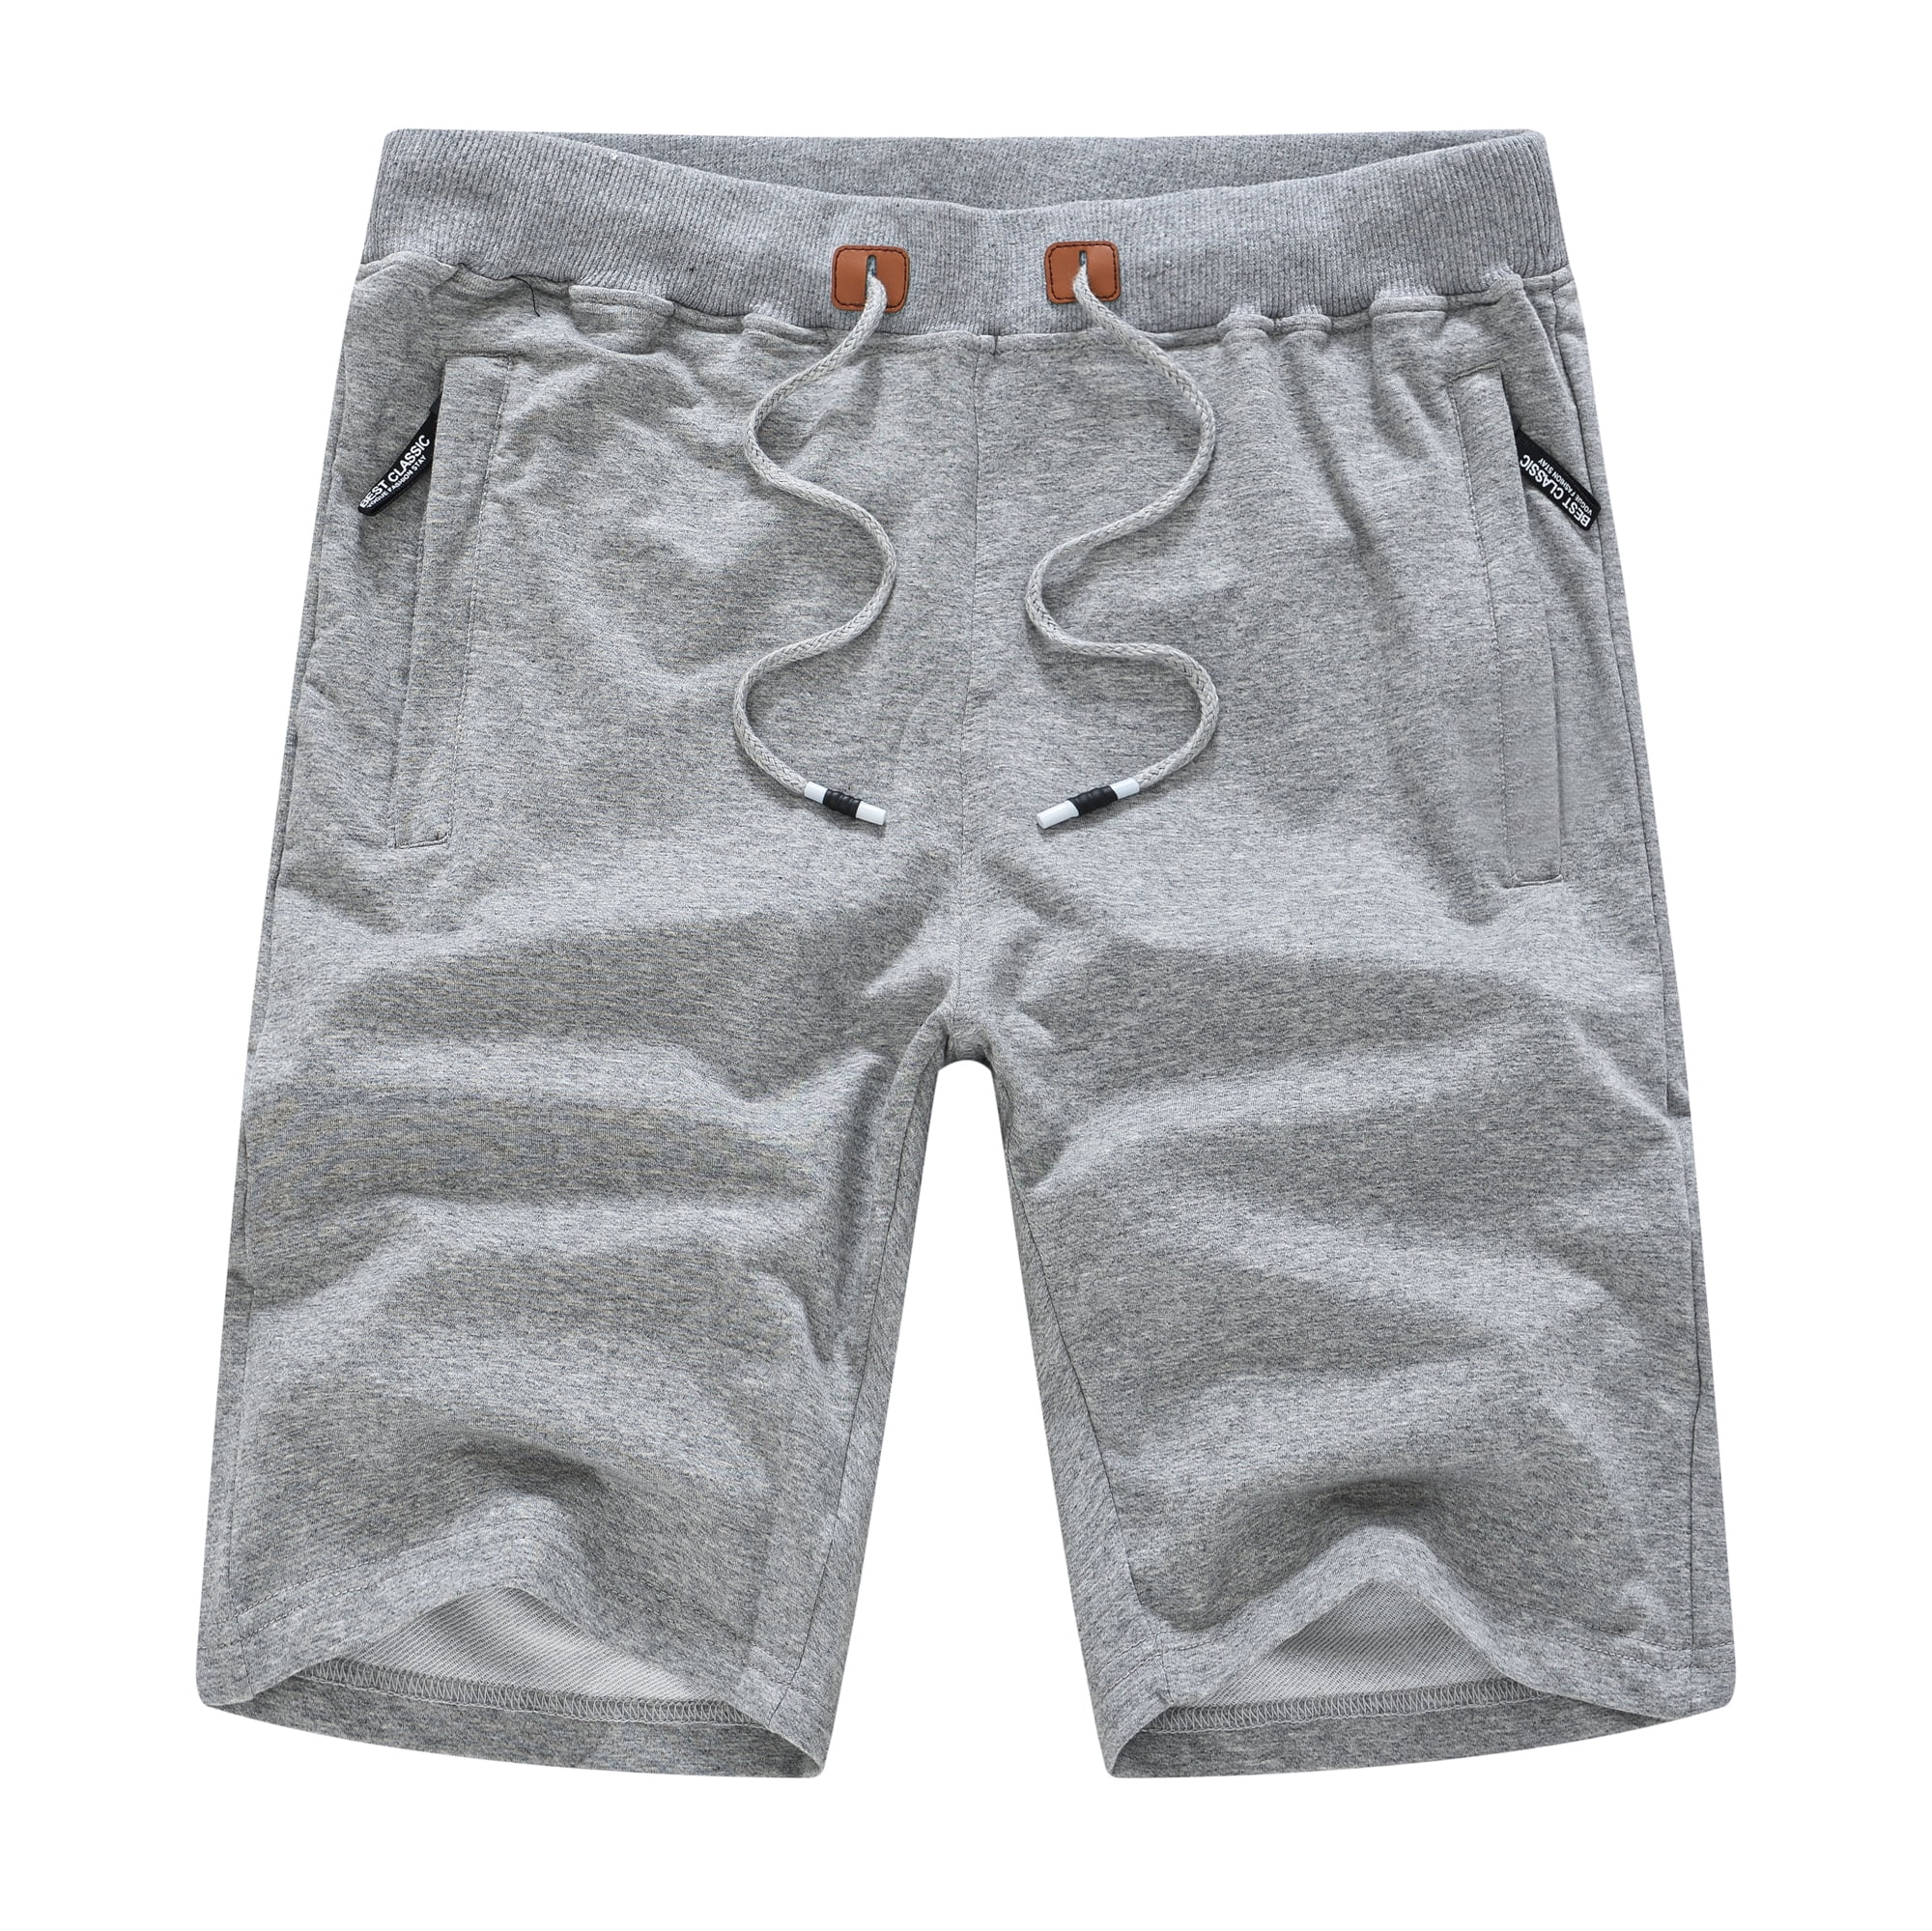 YuKaiChen Mens Shorts Casual Cotton Jogger Shorts Elastic Waist with Zipper Pockets 